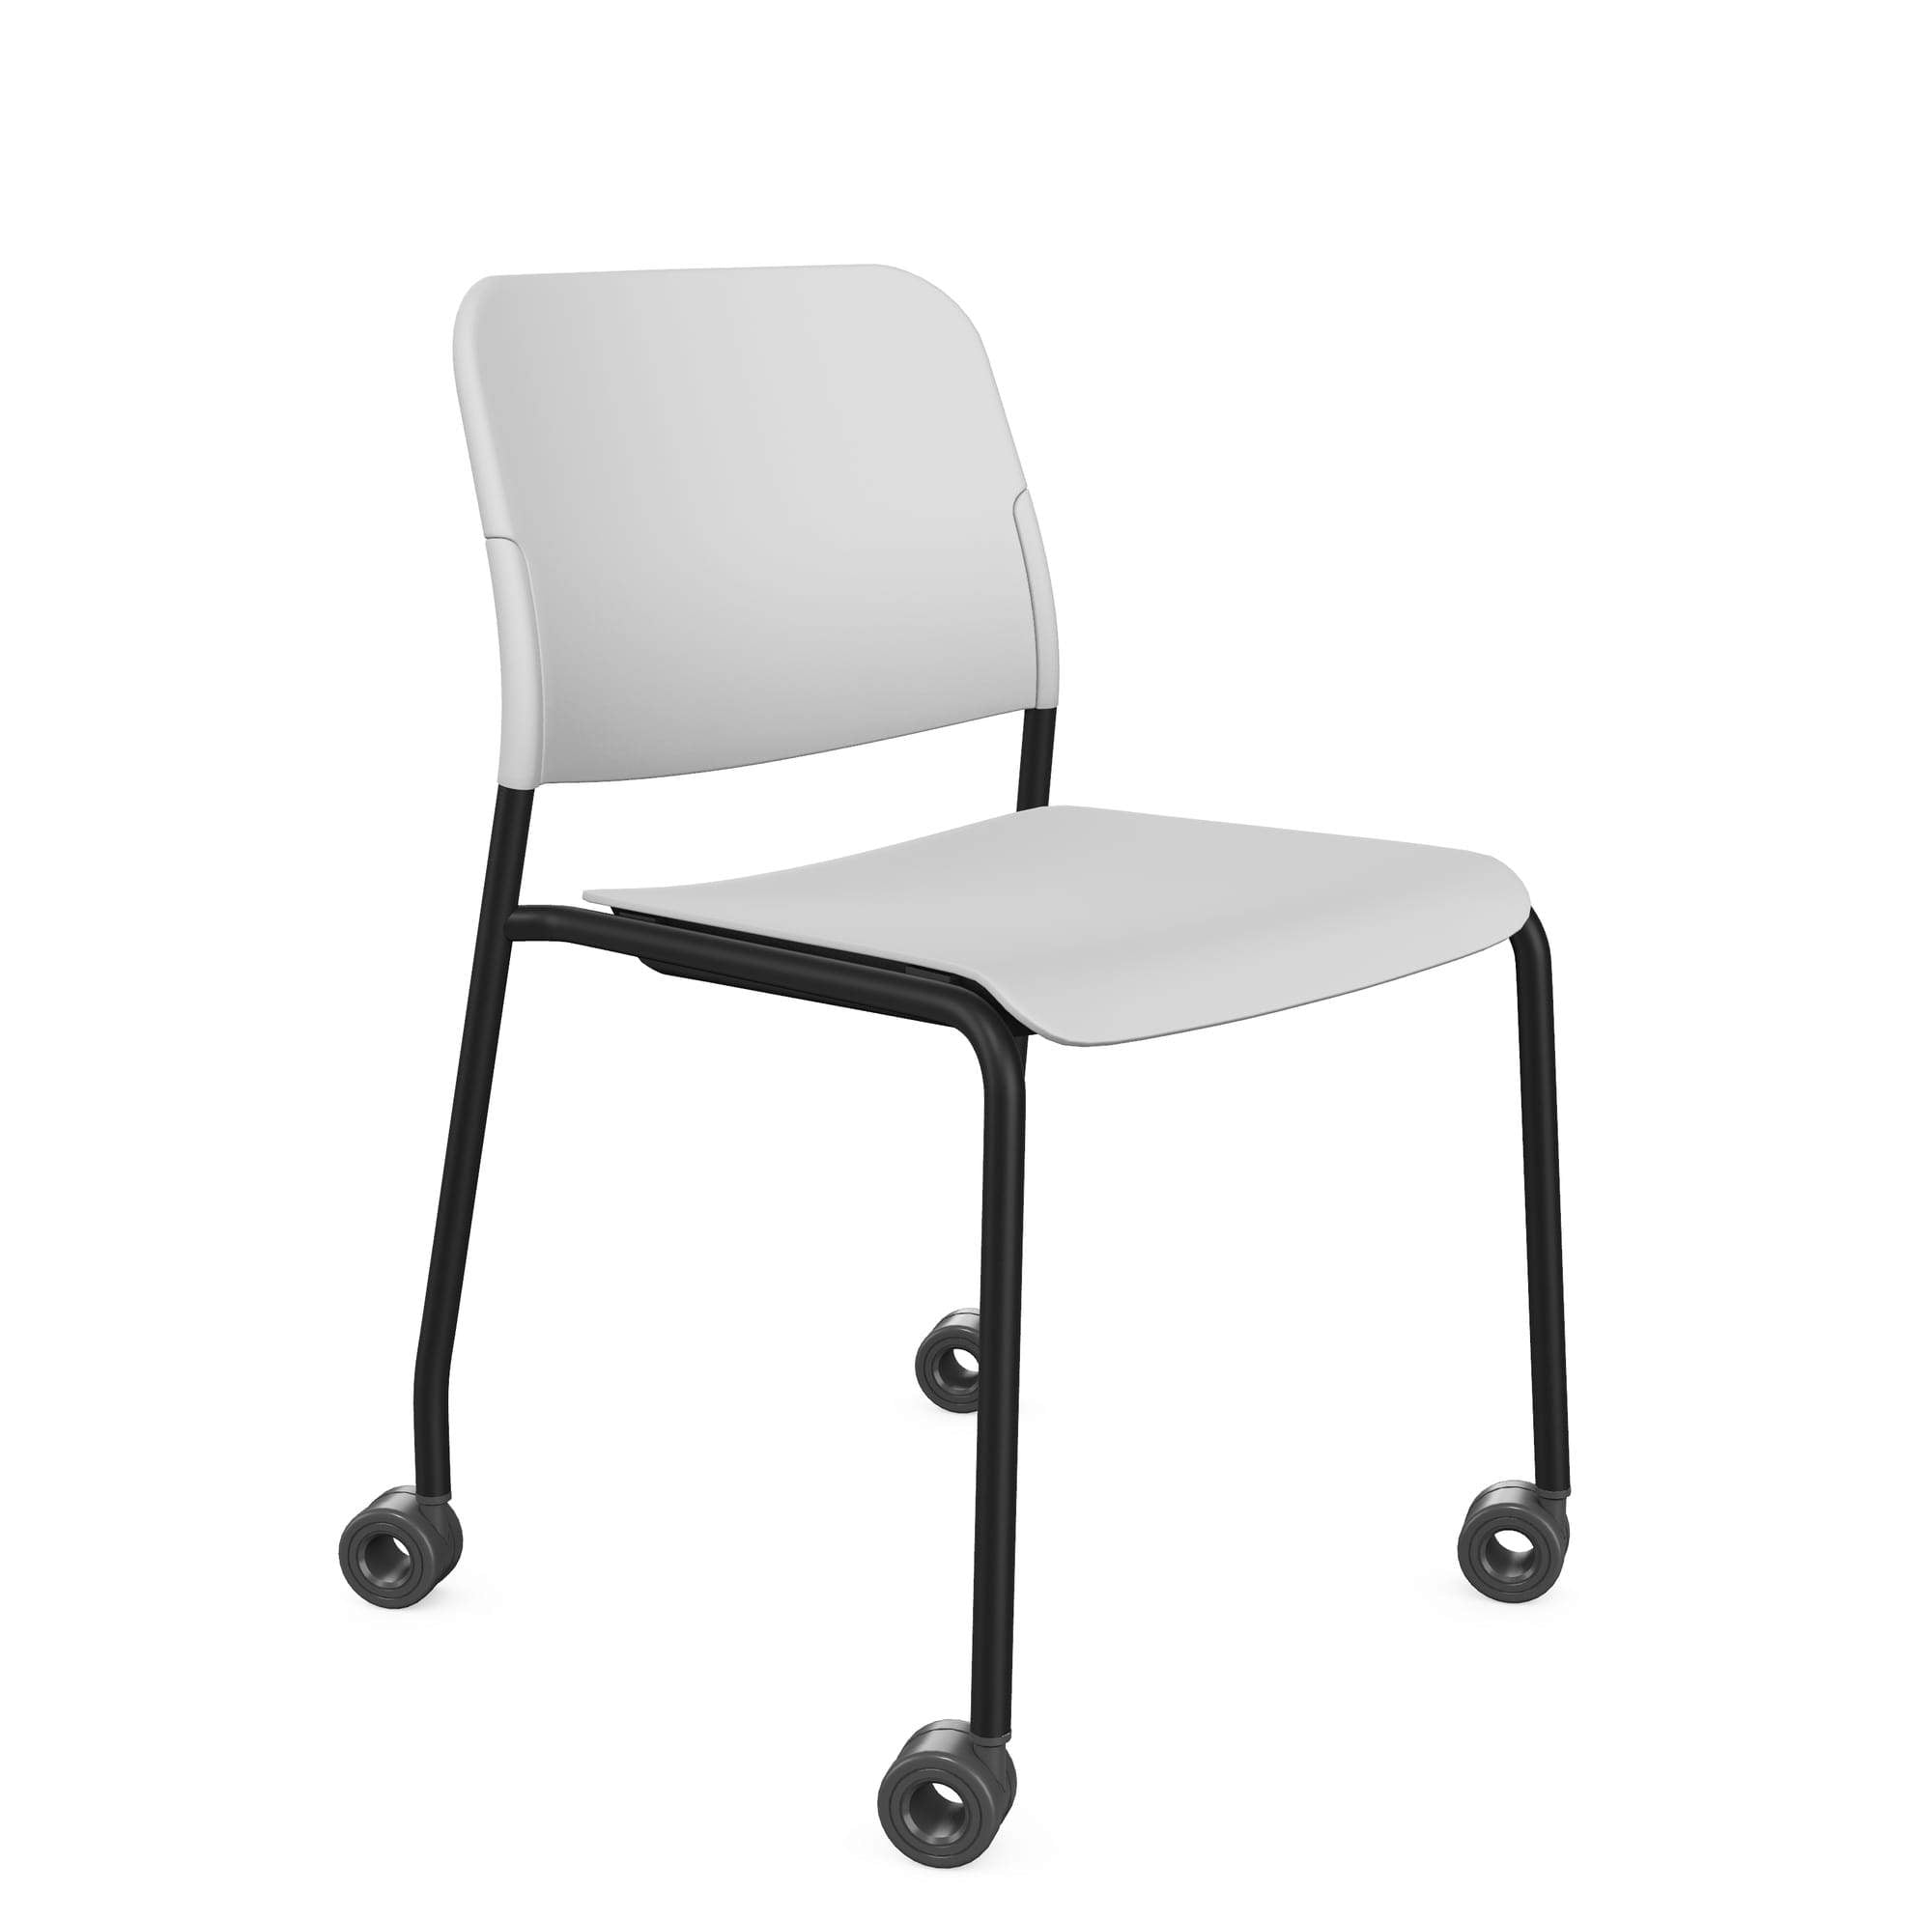 Zoo Plastic Seat and Backrest Chair, 4-Legged Frame on Castors - Model 522HC